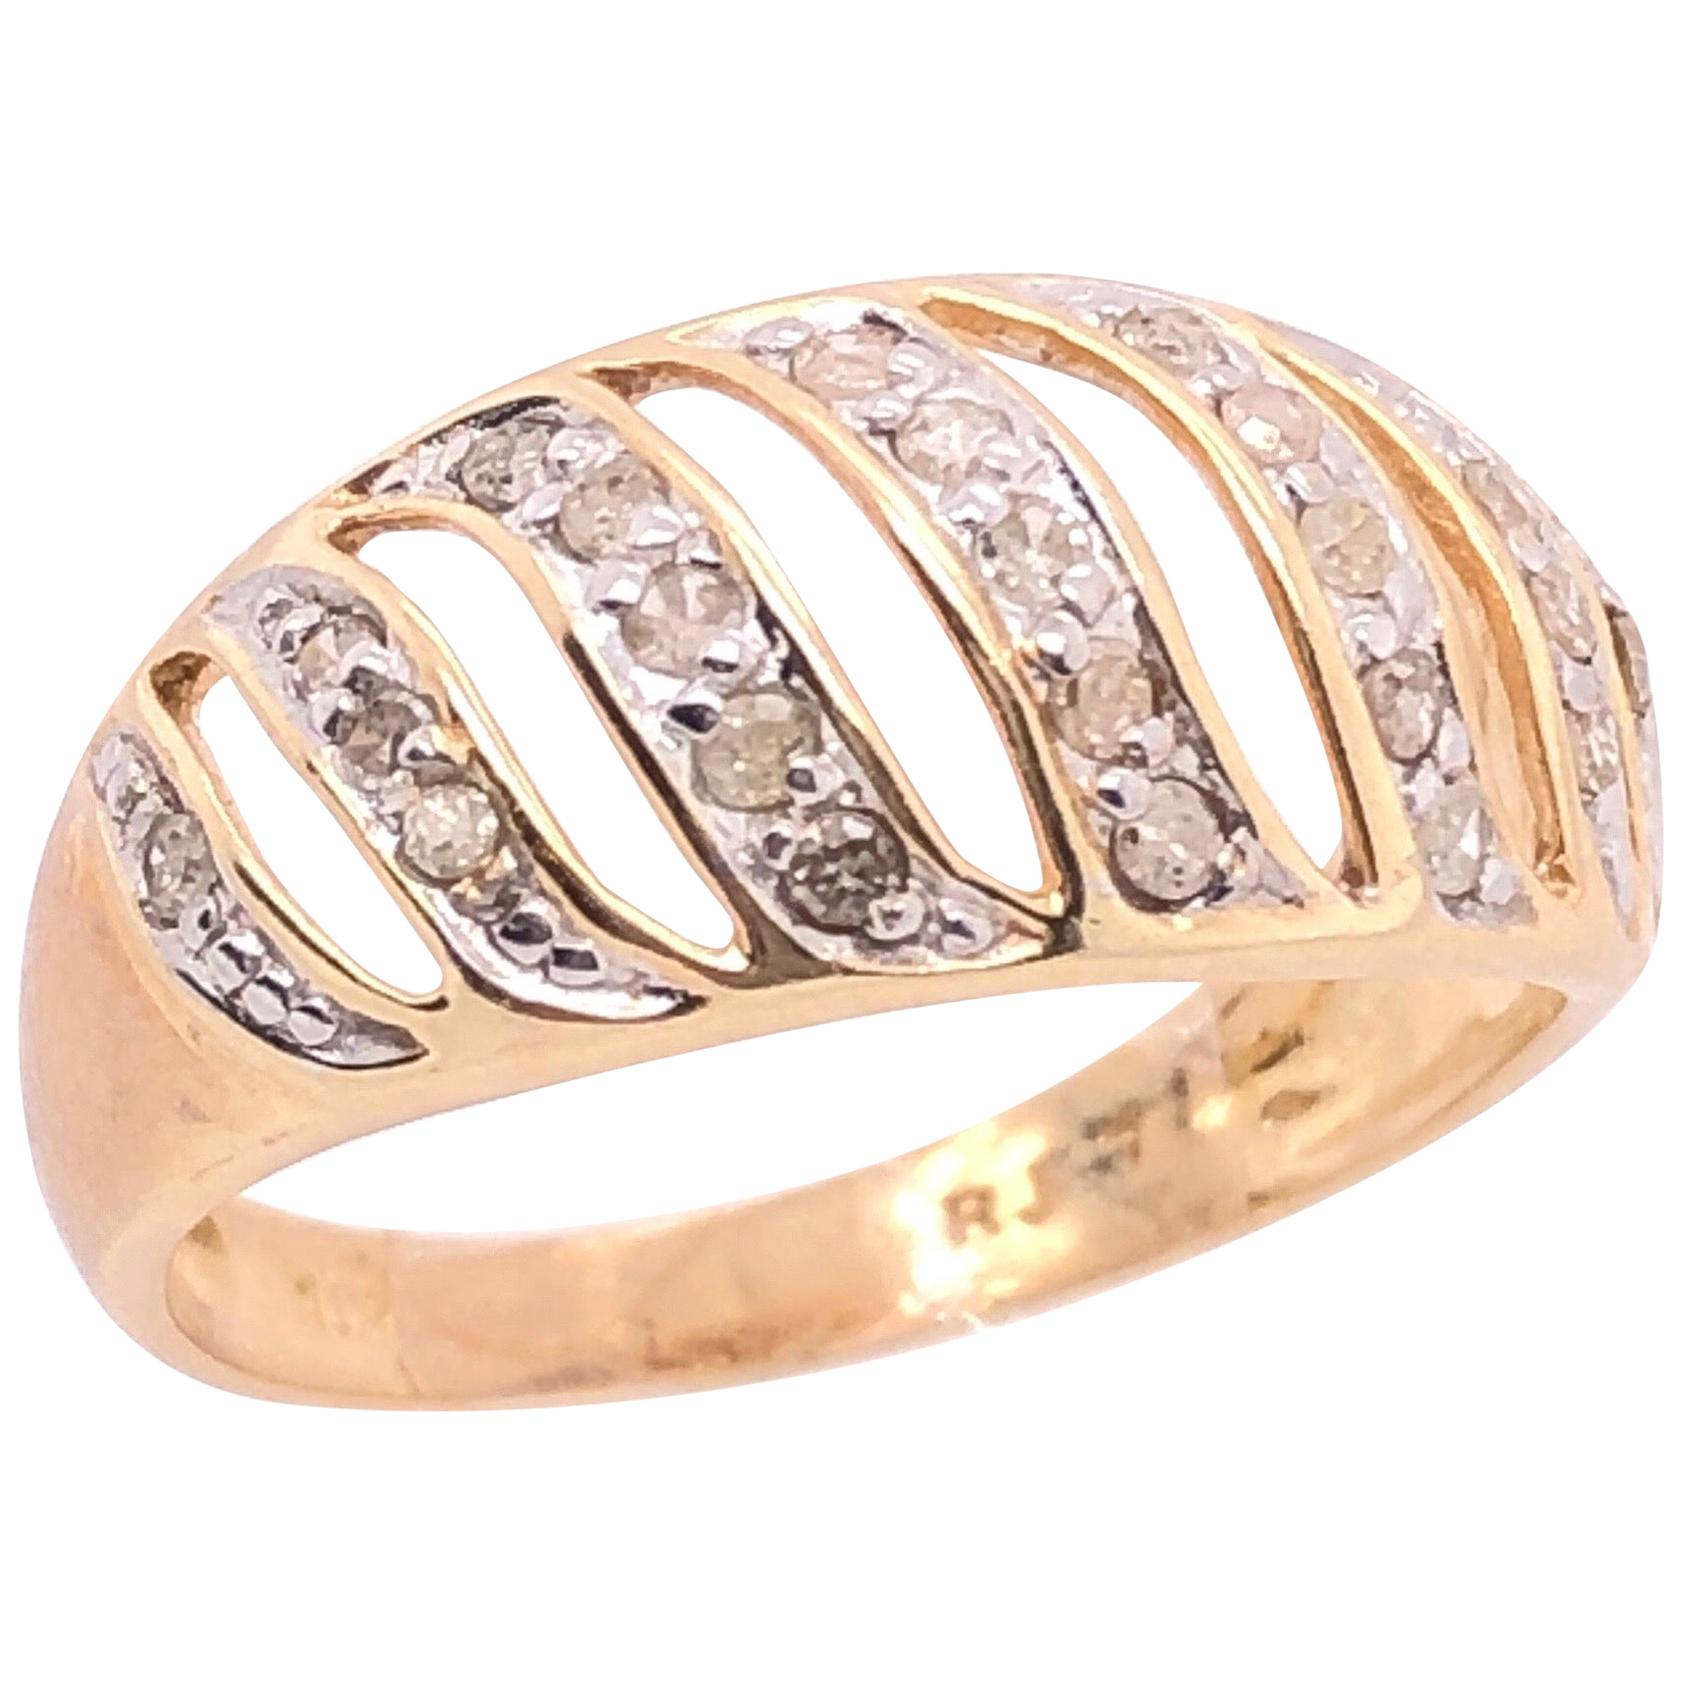 14 Karat Yellow Gold and Diamond Fashion Ring